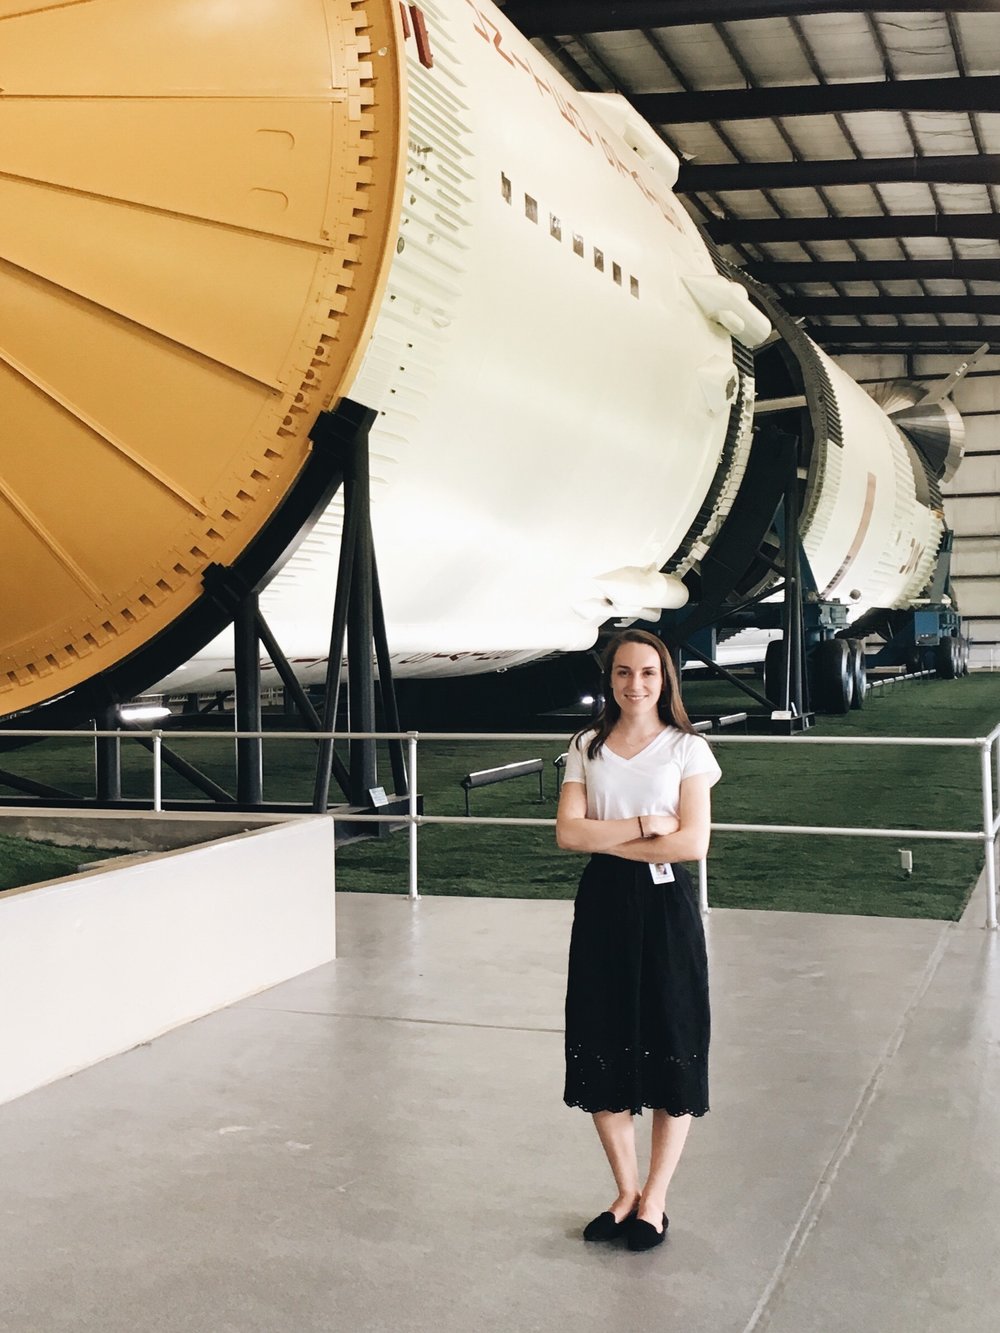 Julia Milton in front of the Saturn V rocket